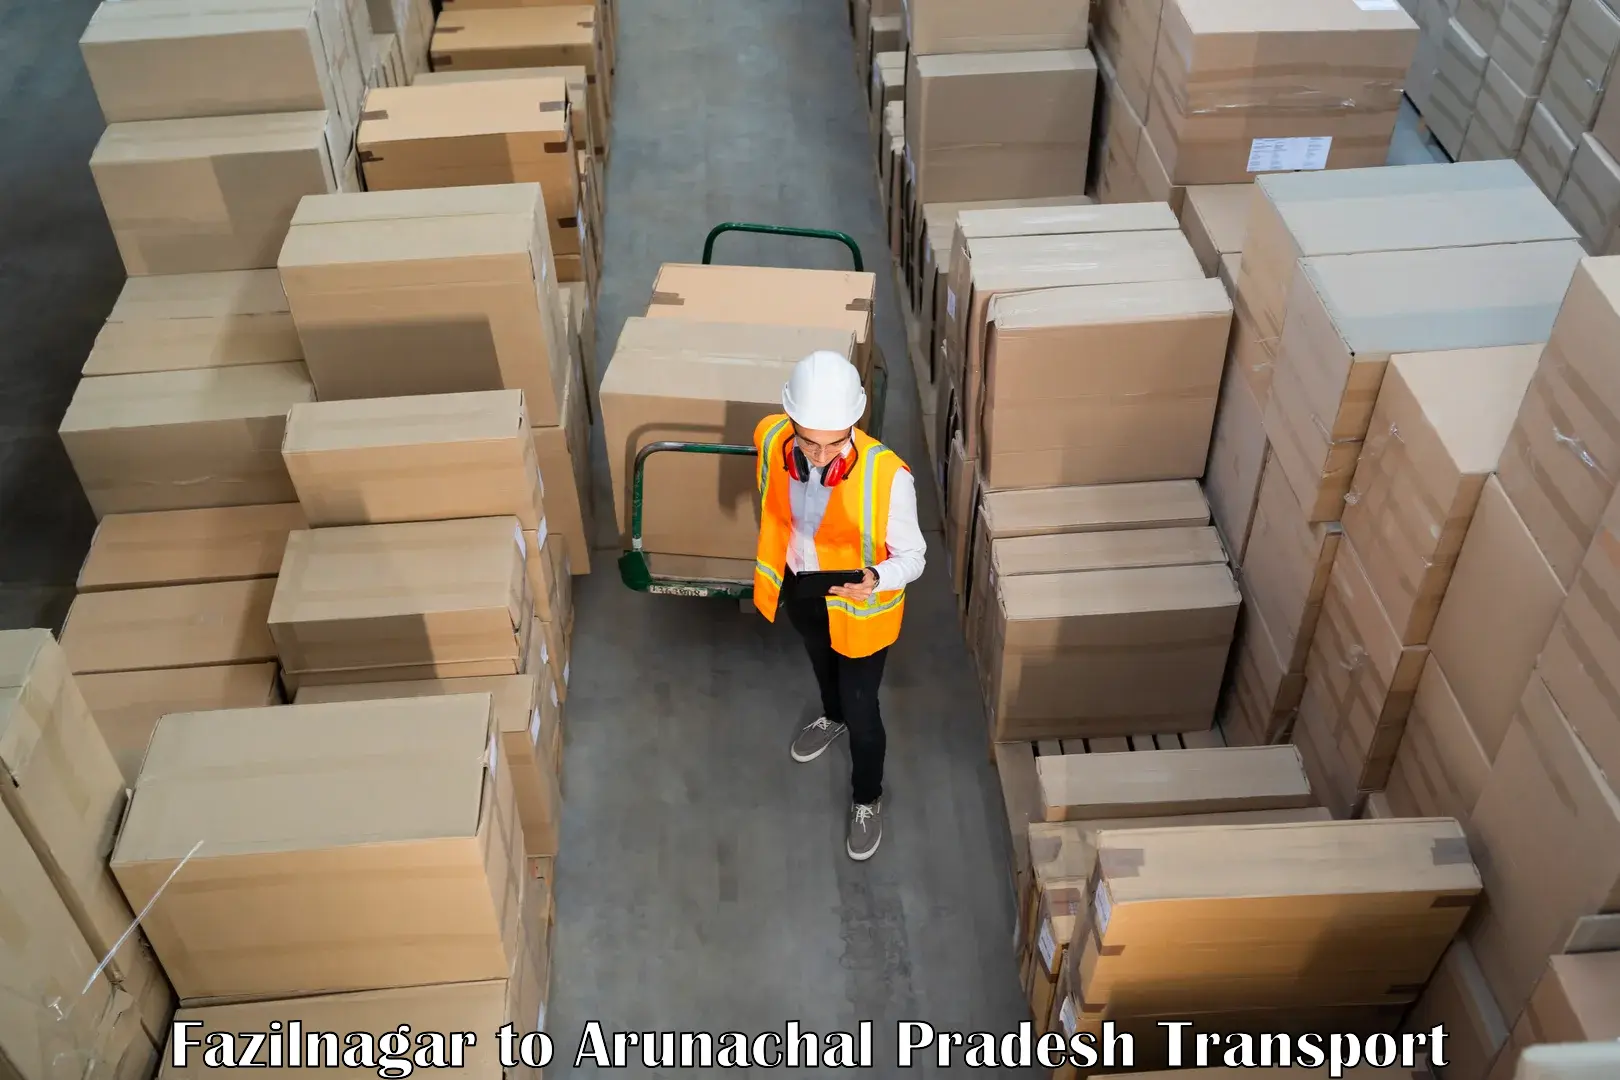 Truck transport companies in India Fazilnagar to Pasighat